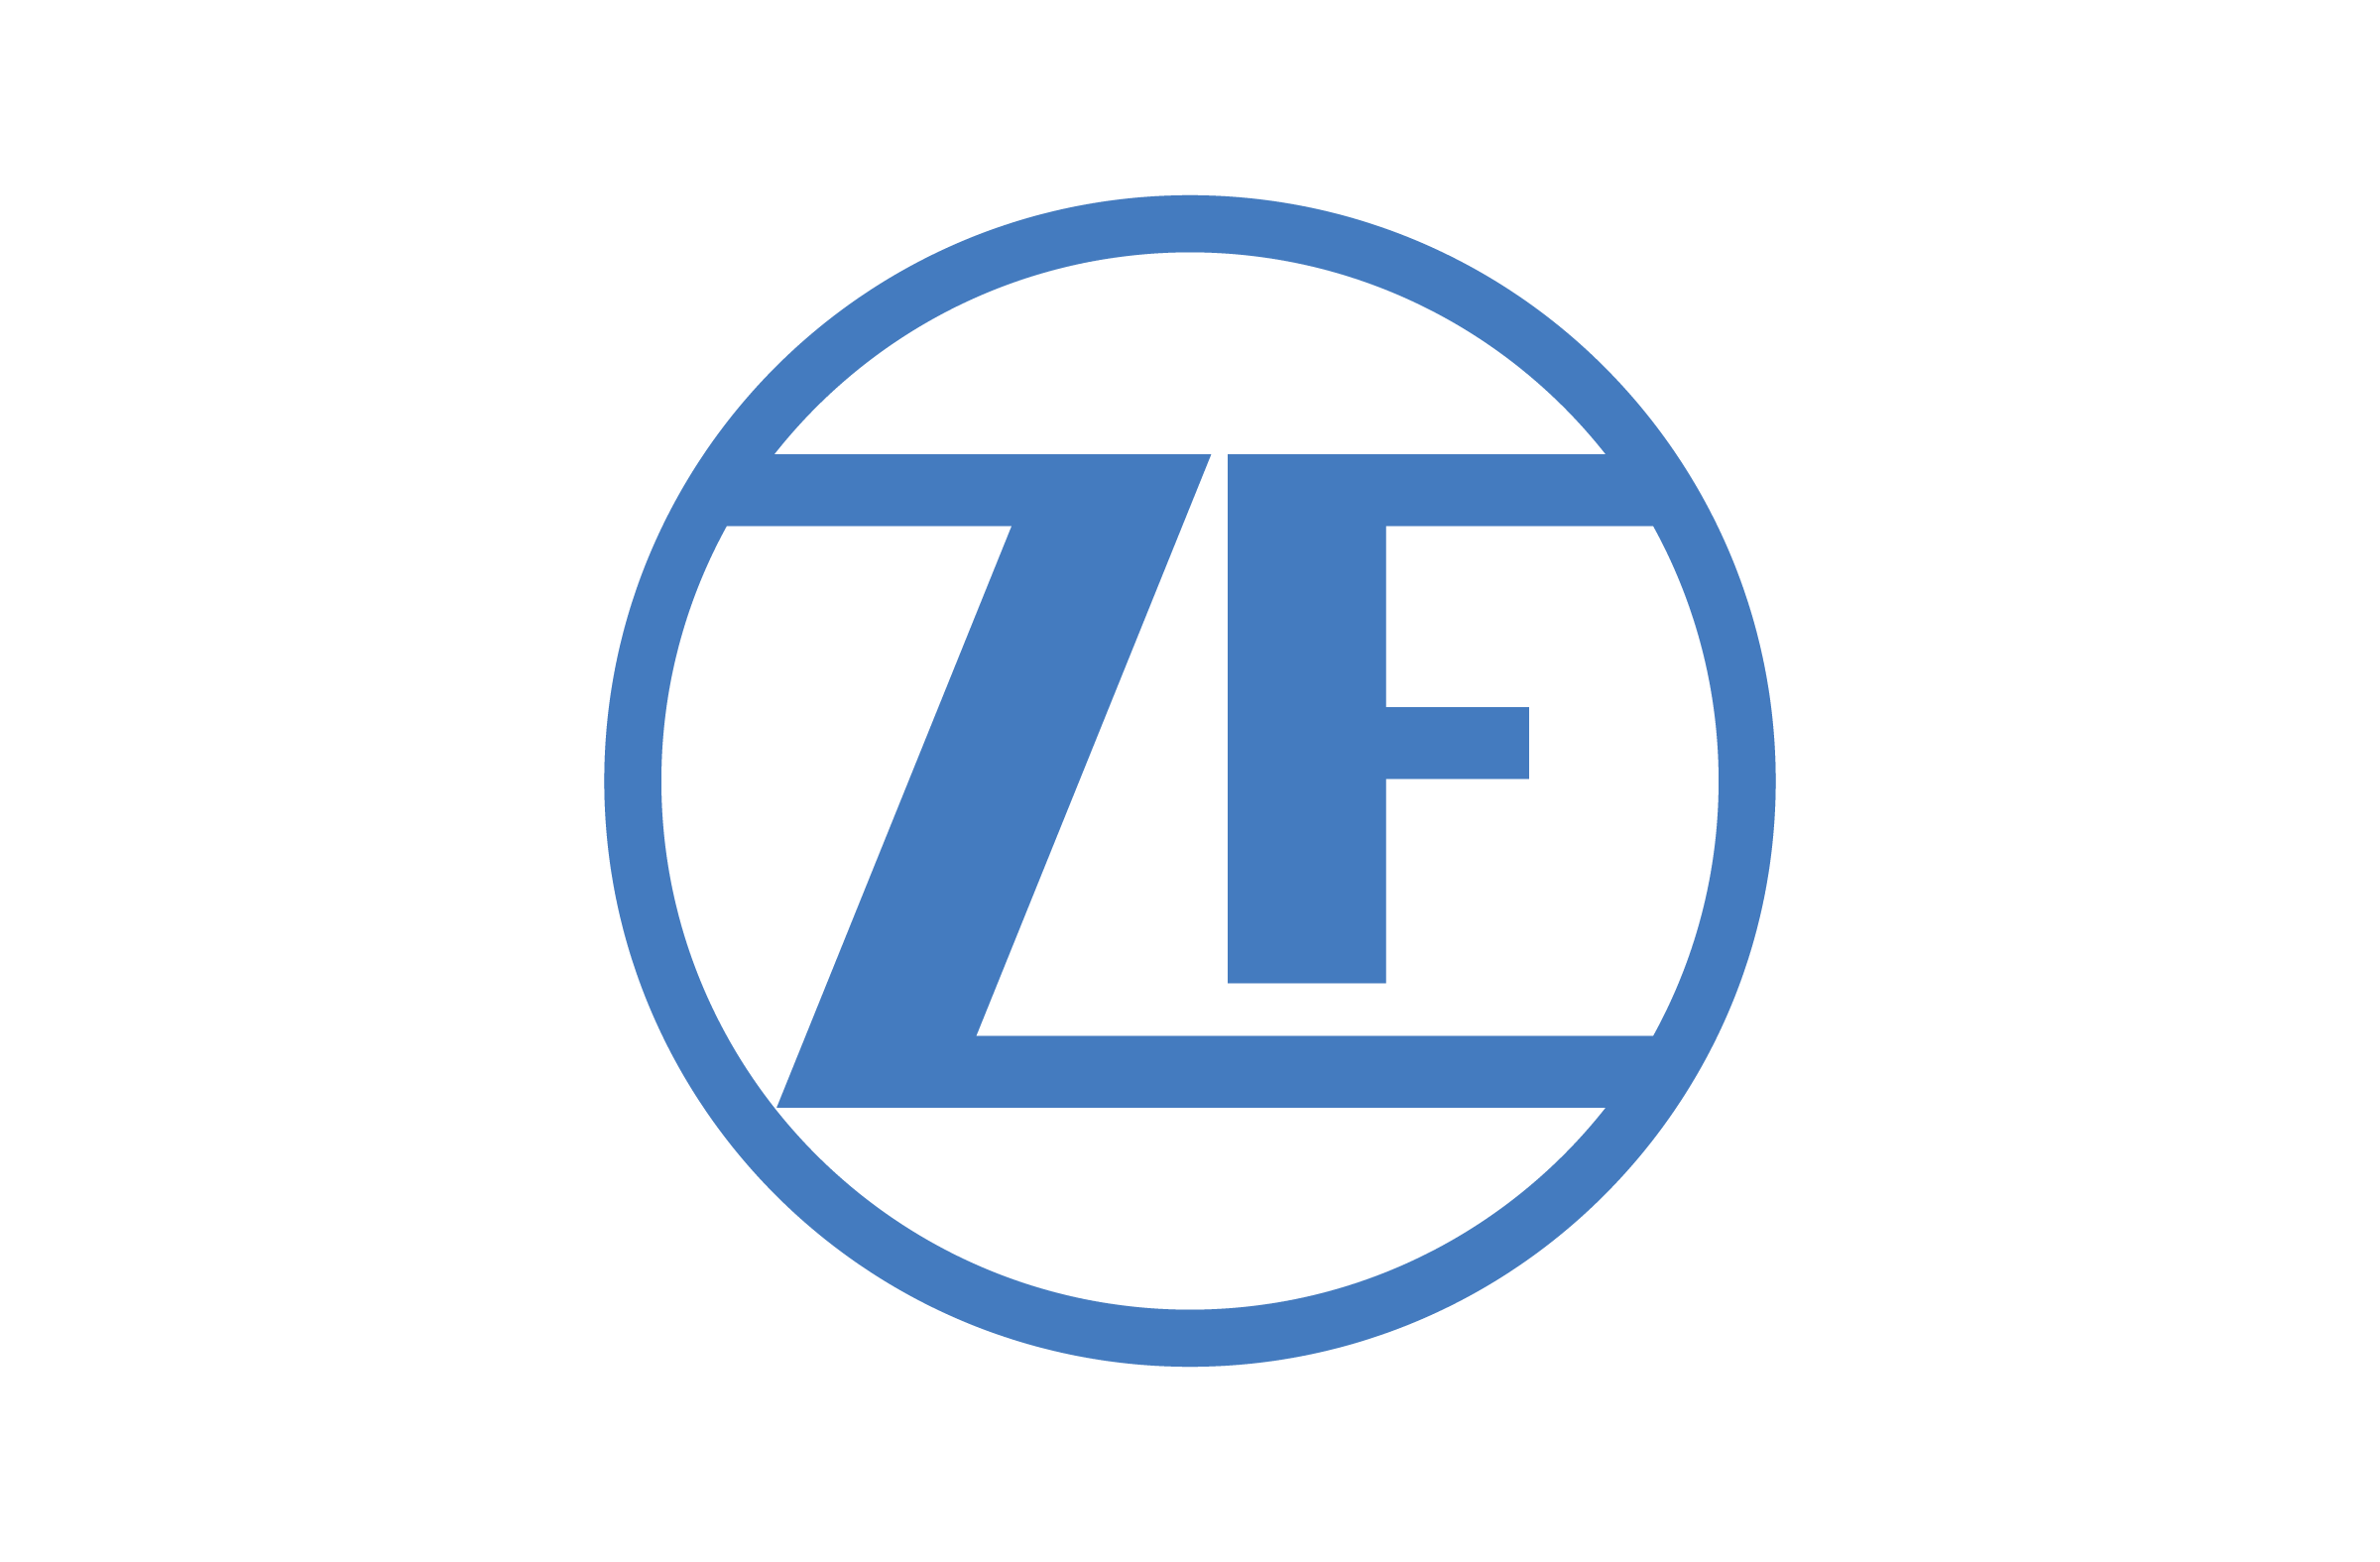 New ZF Logo - new ZF logo - NAIAS